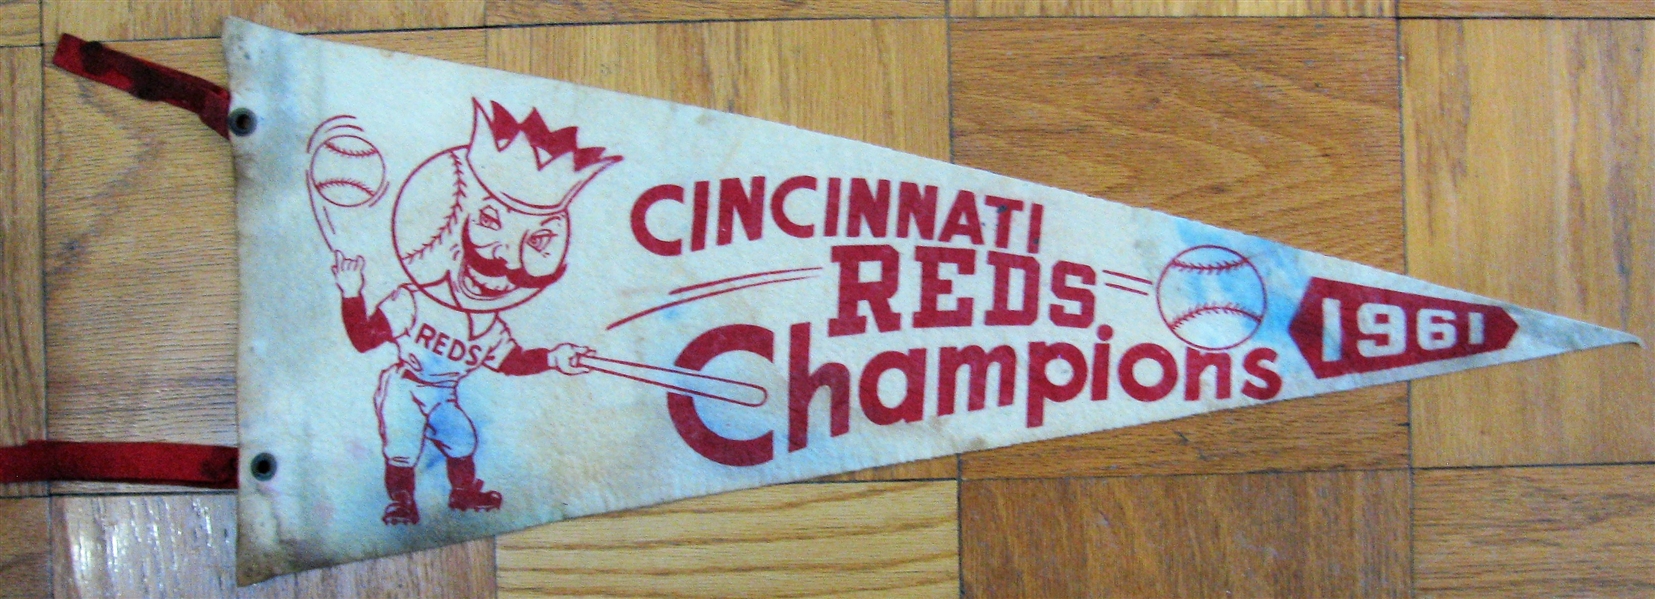 1961 CINCINNATI REDS N.L. CHAMPIONS PENNANT - UNUSUAL!